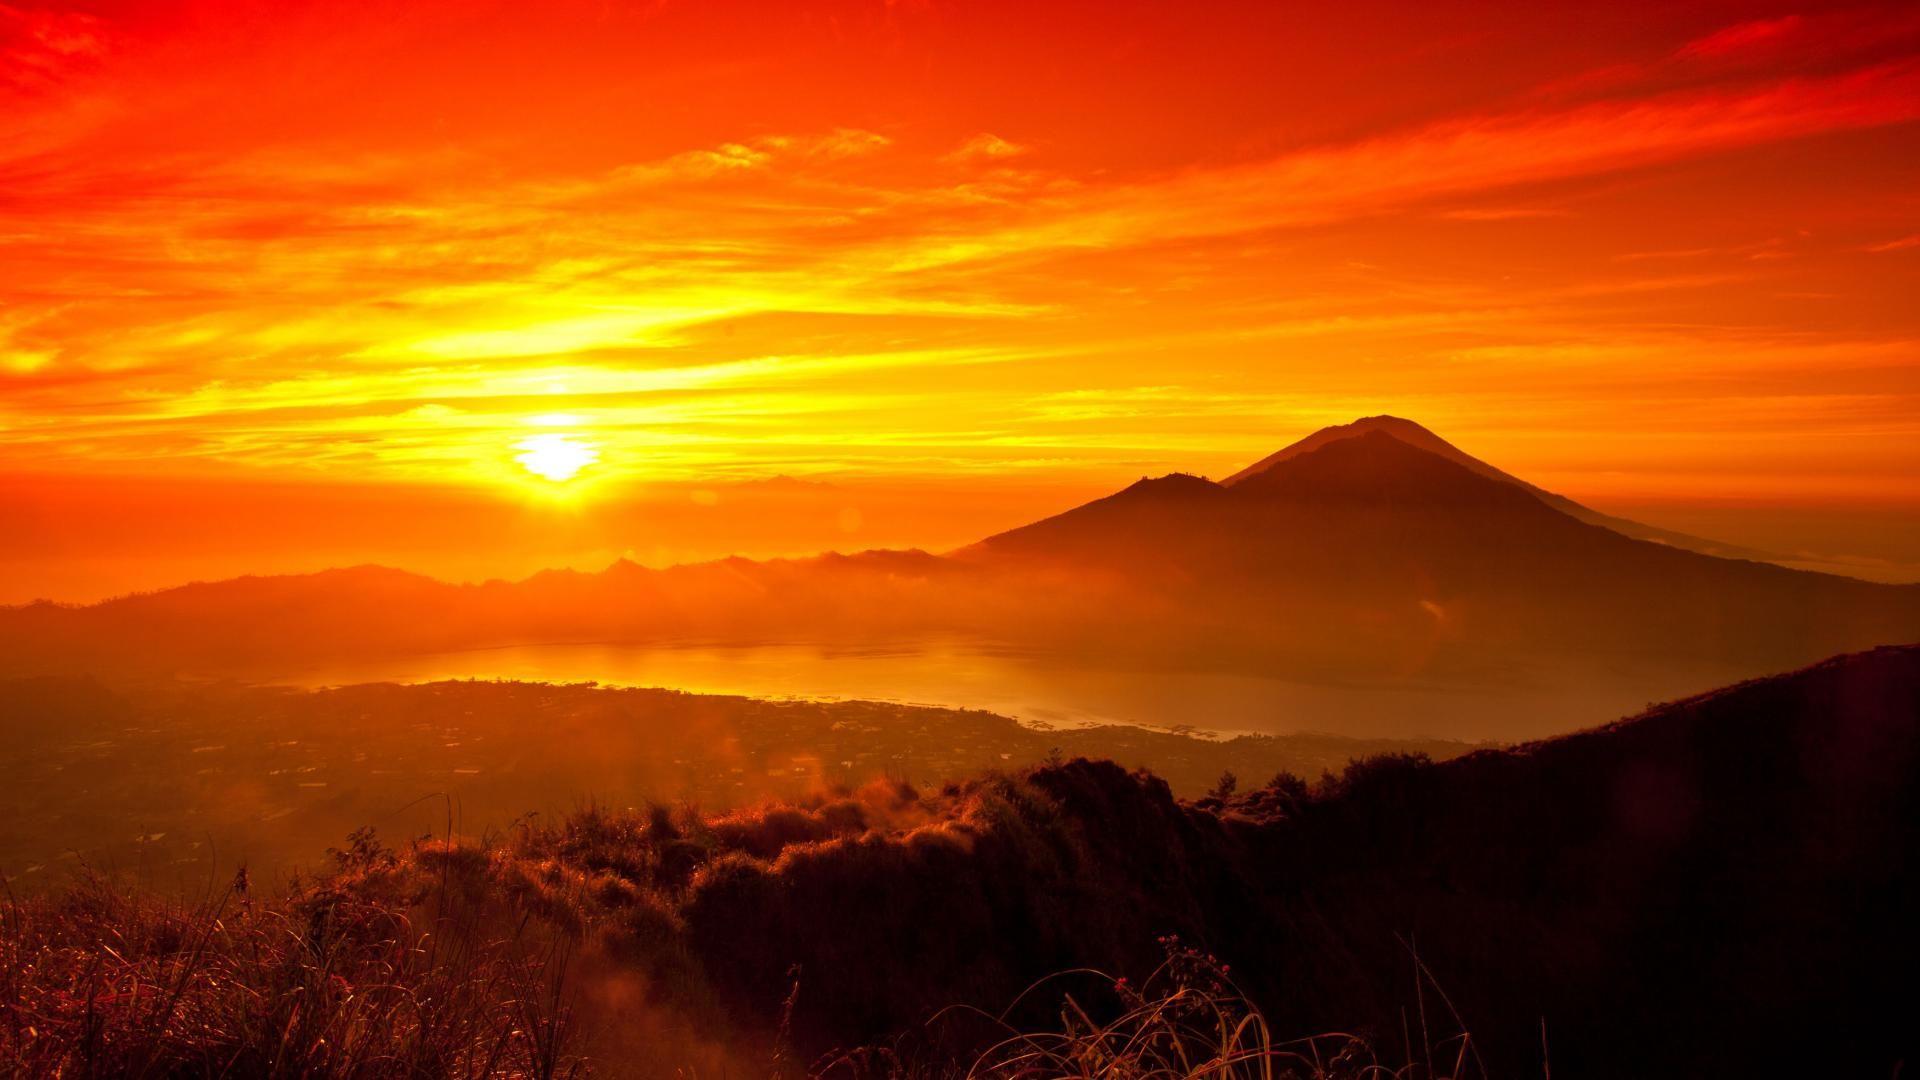 Bali Sunset Wallpapers Top Free Bali Sunset Backgrounds Wallpaperaccess